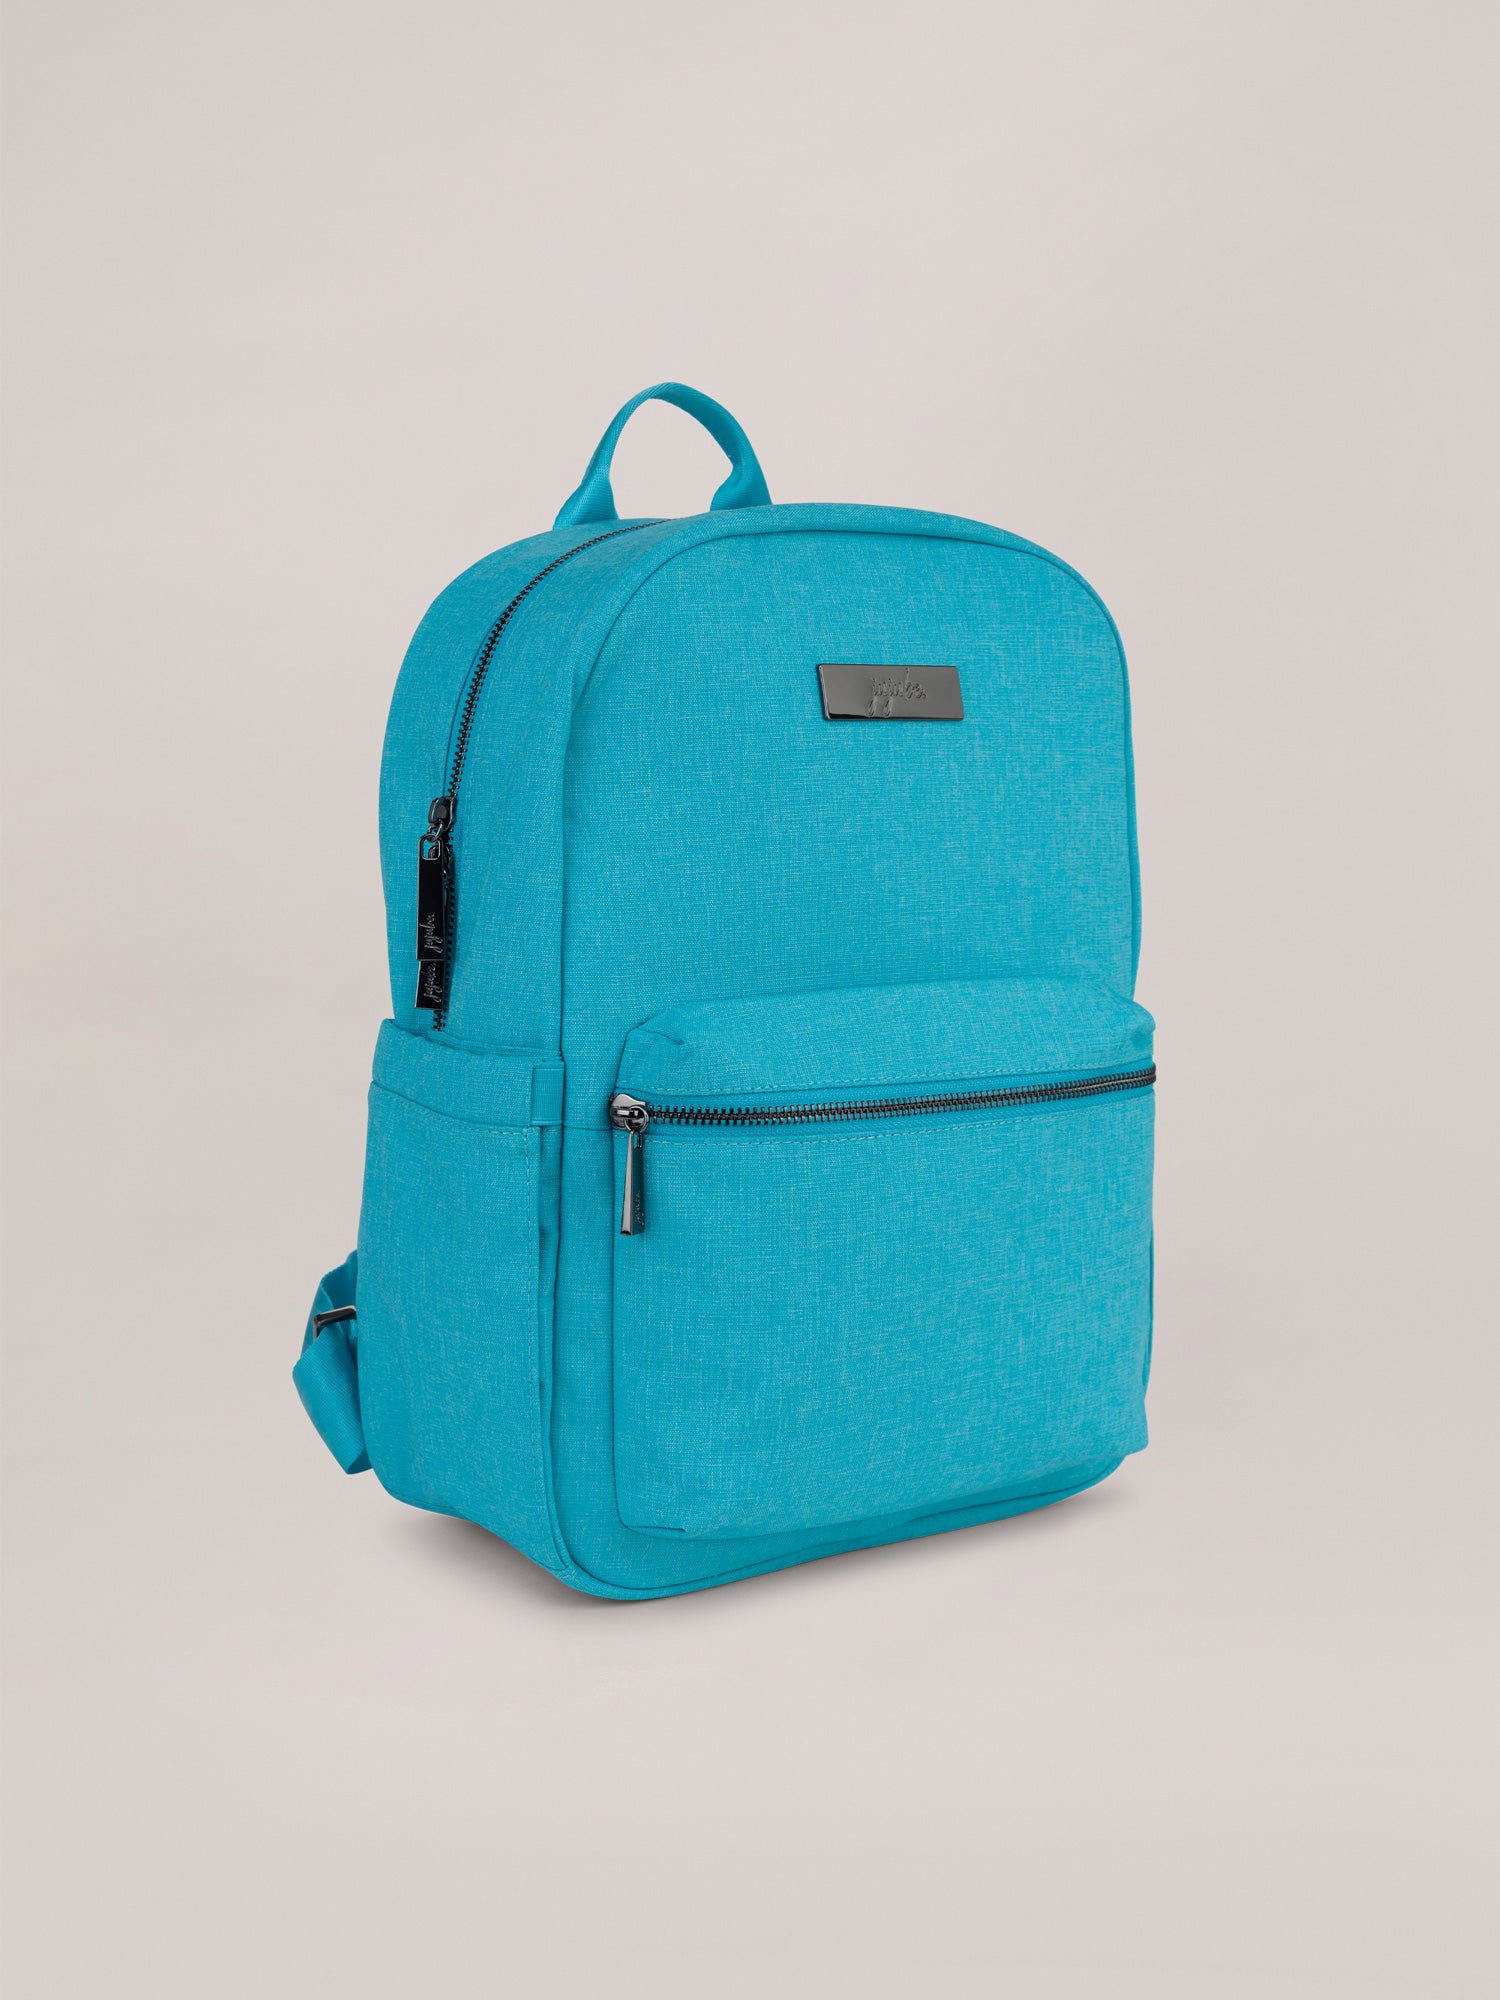 Bright Blue Midi Backpack Quarter Angle View